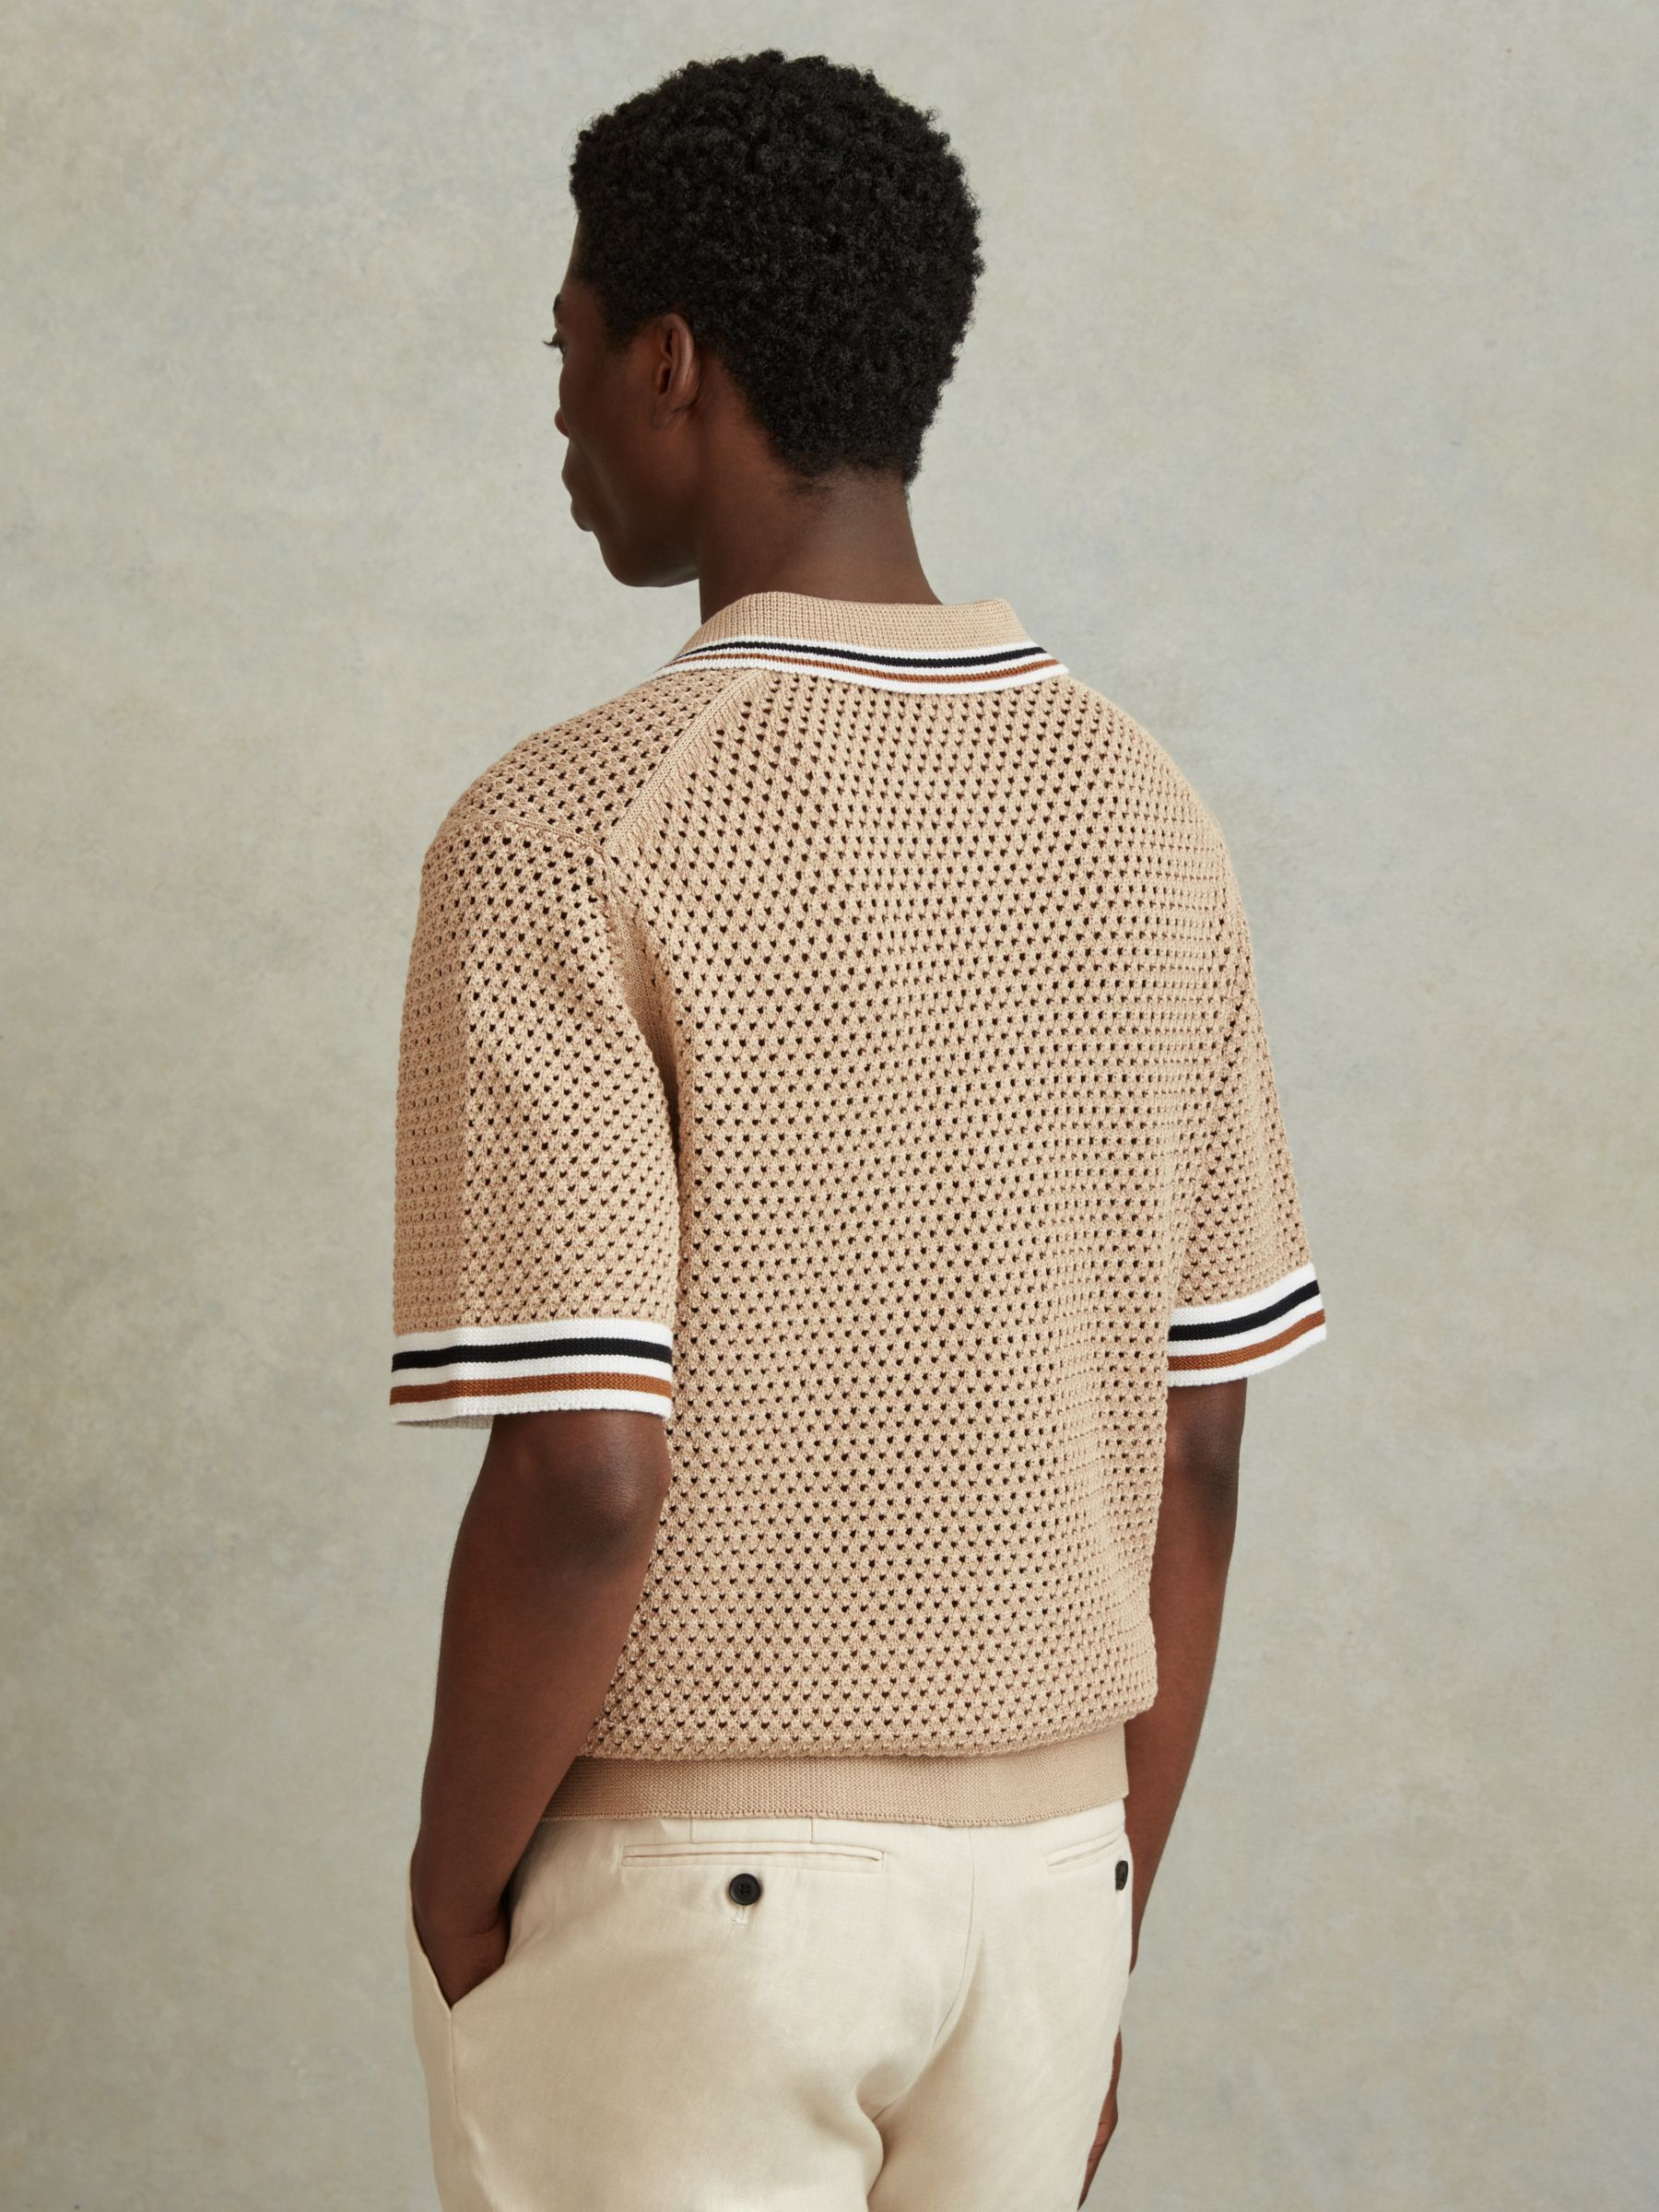 Reiss Coulson Short Sleeve Crochet Tipped Shirt, Soft Taupe, XS